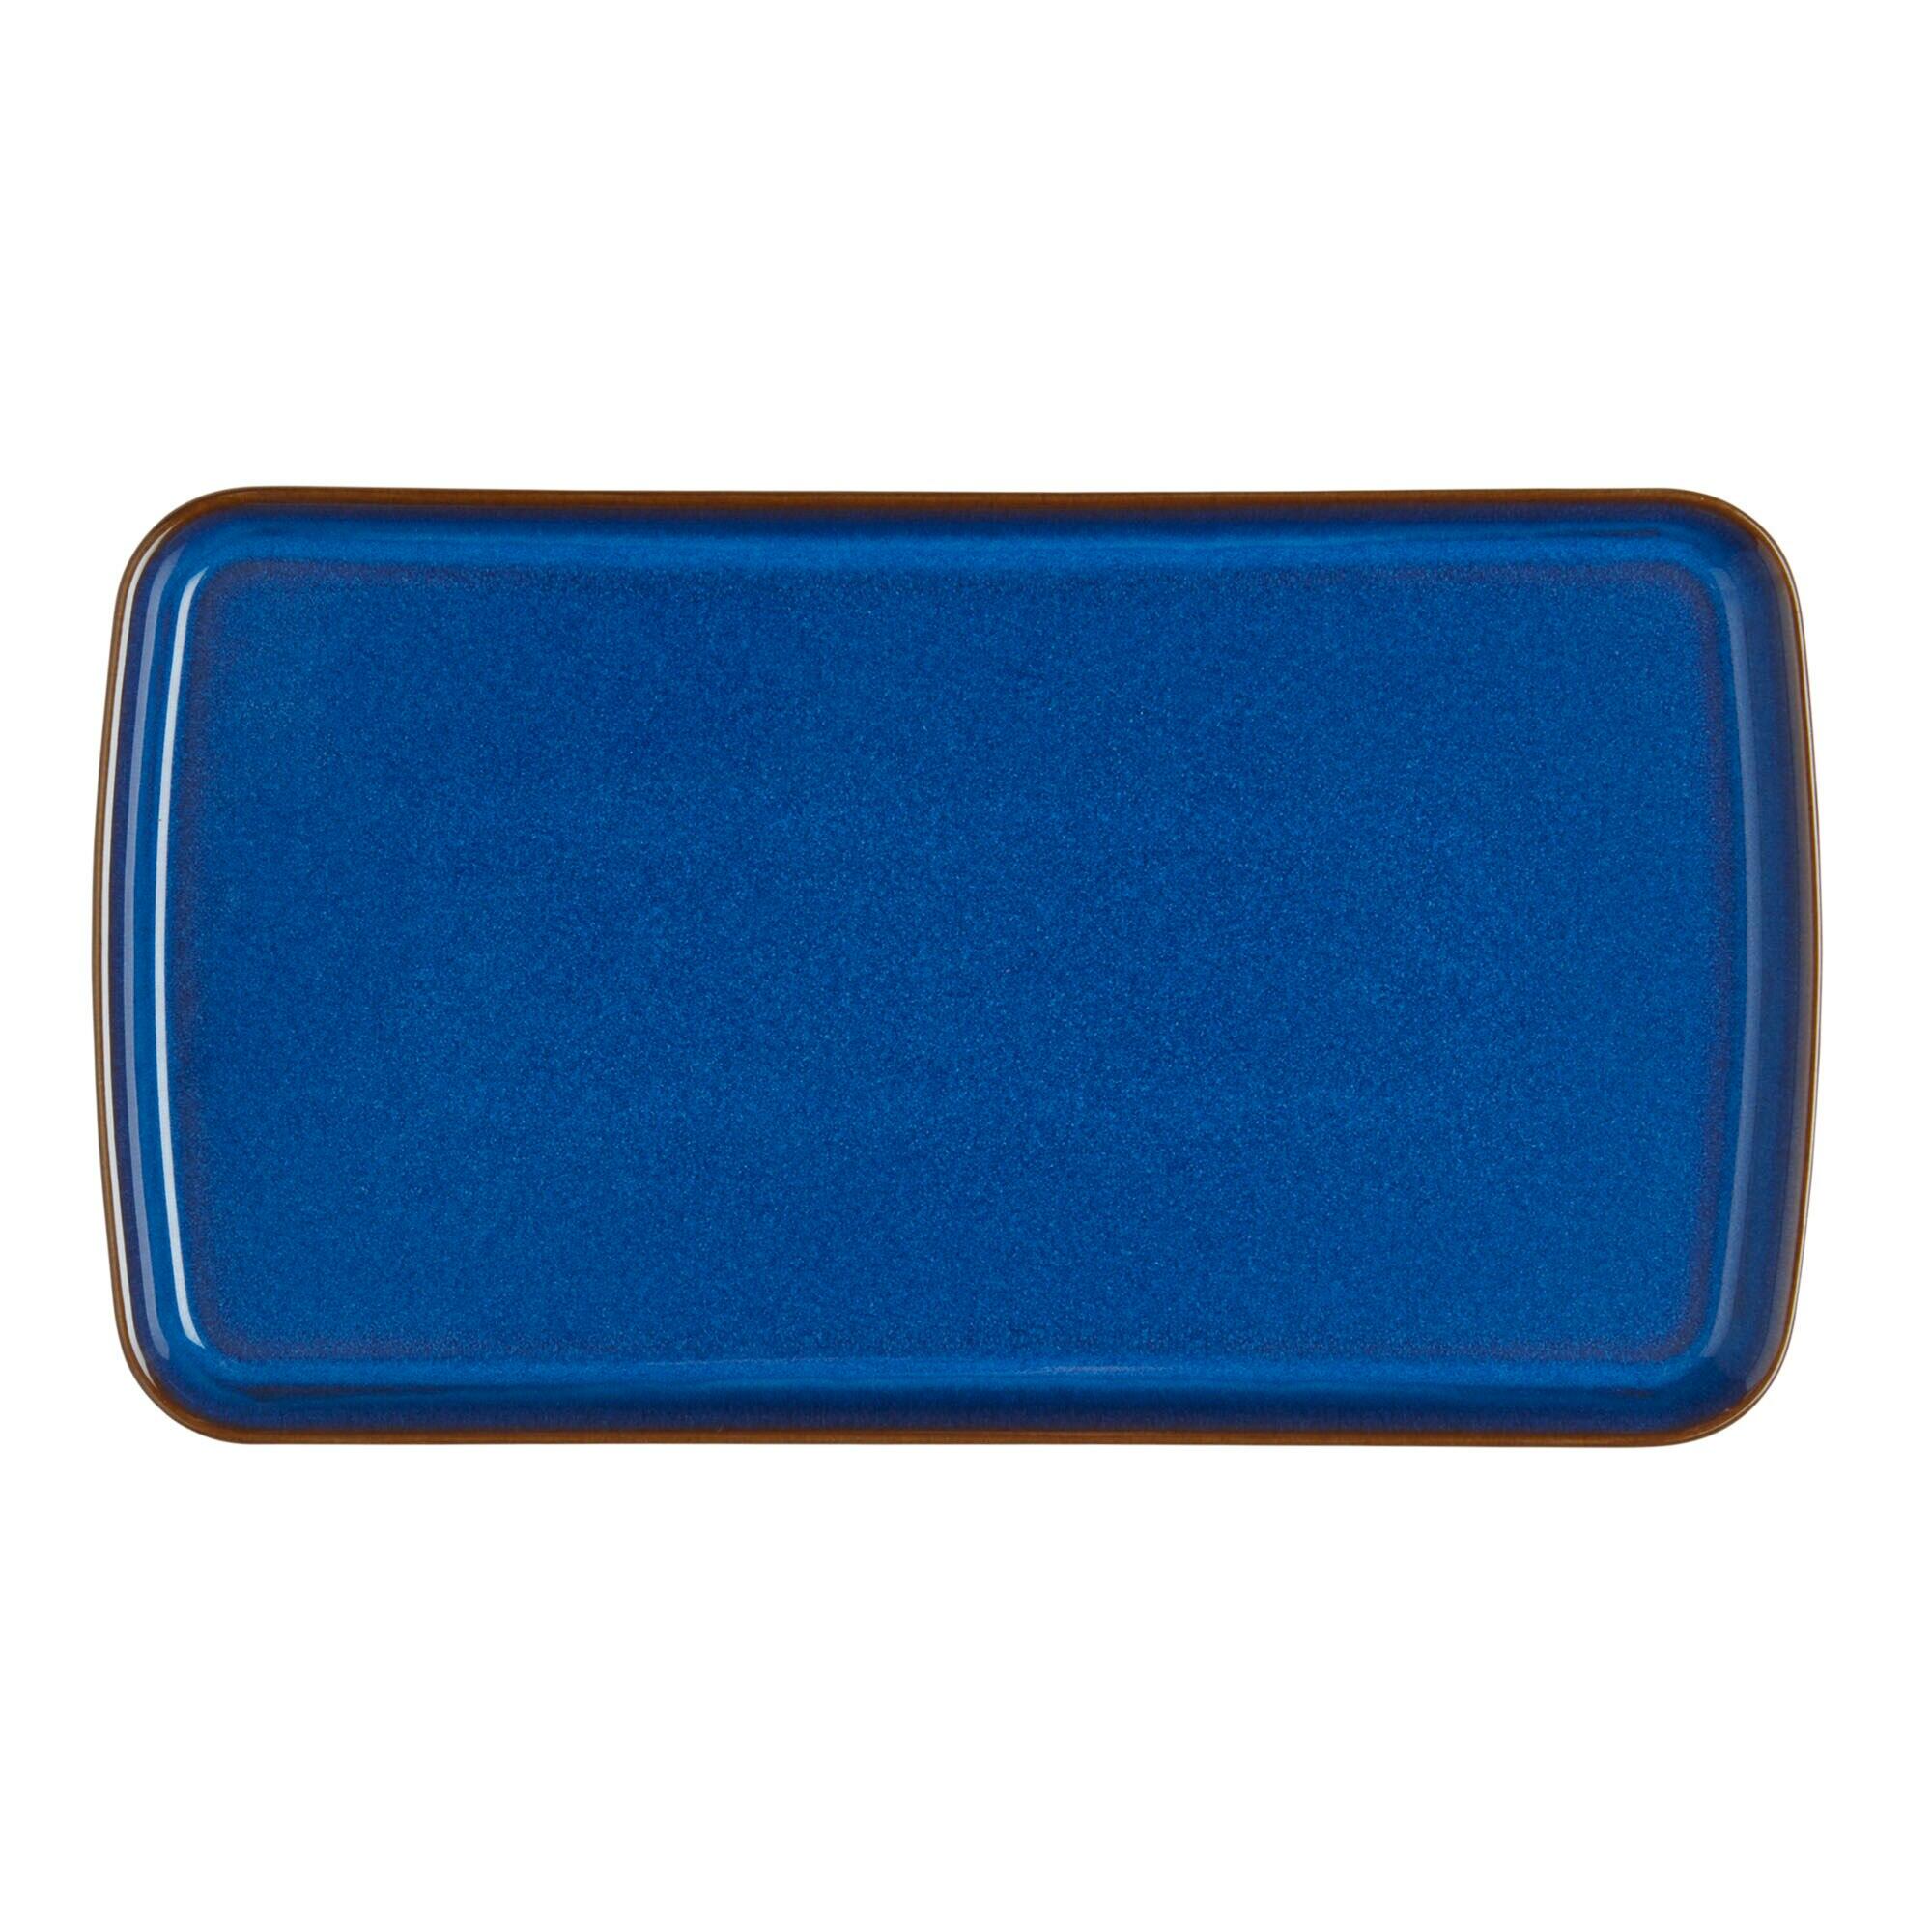 Imperial Blue Small Rectangular Platter